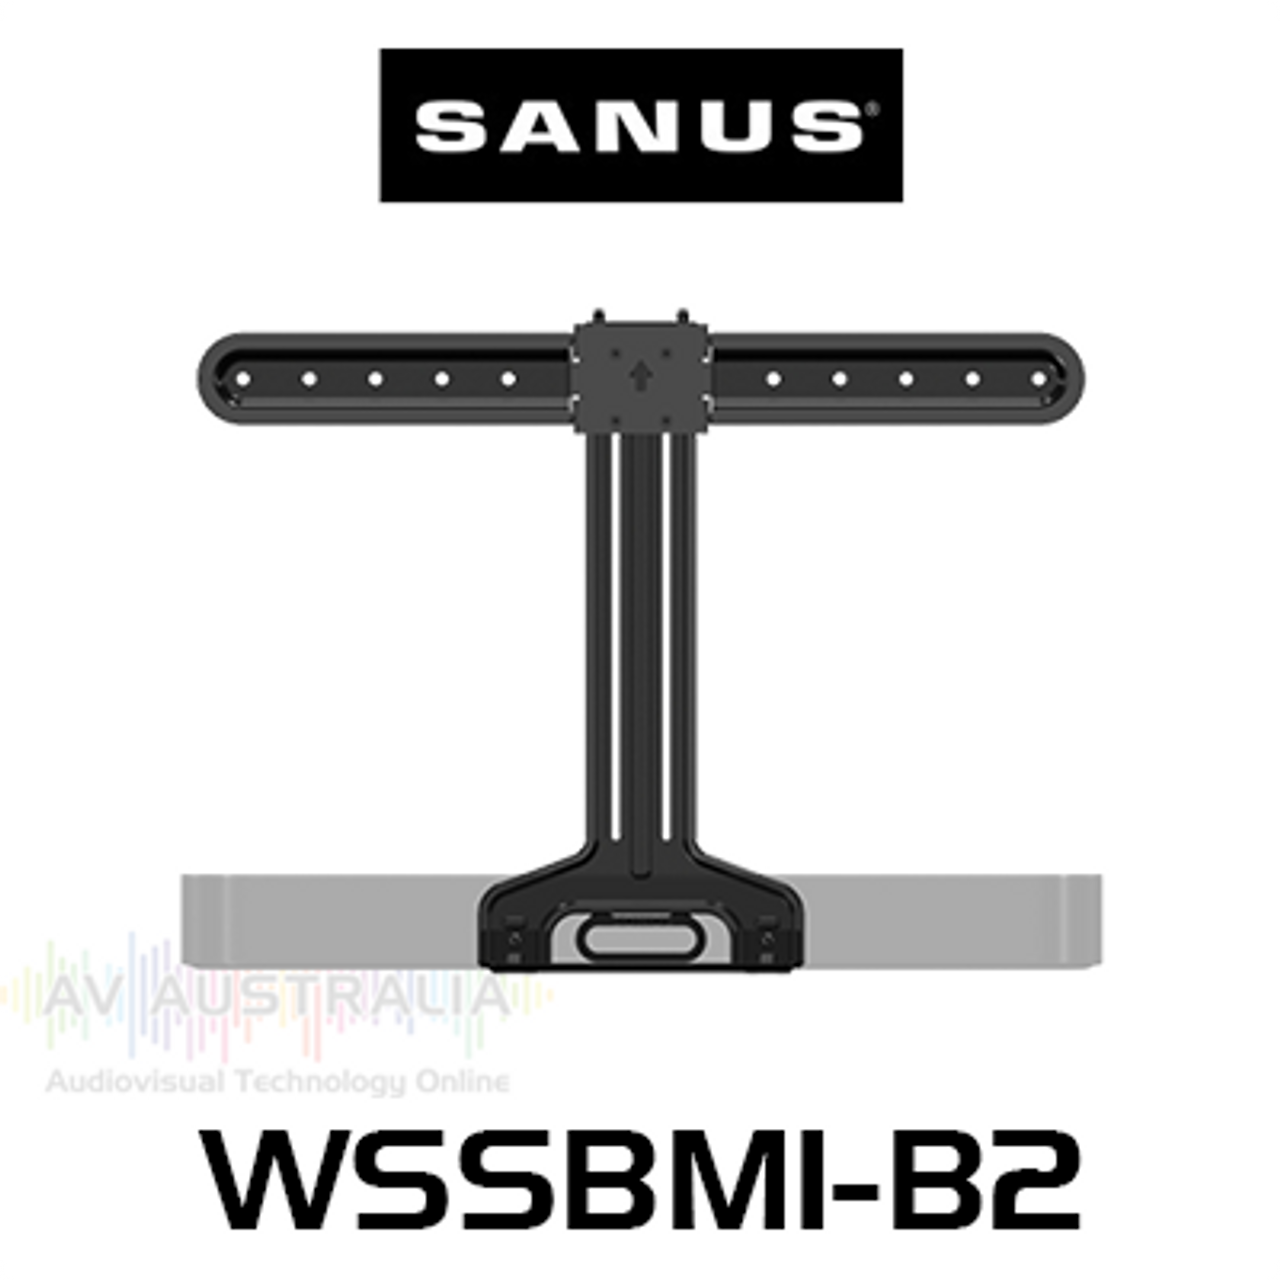 Sanus WSSBM1-B2 Soundbar Mount For Sonos Beam